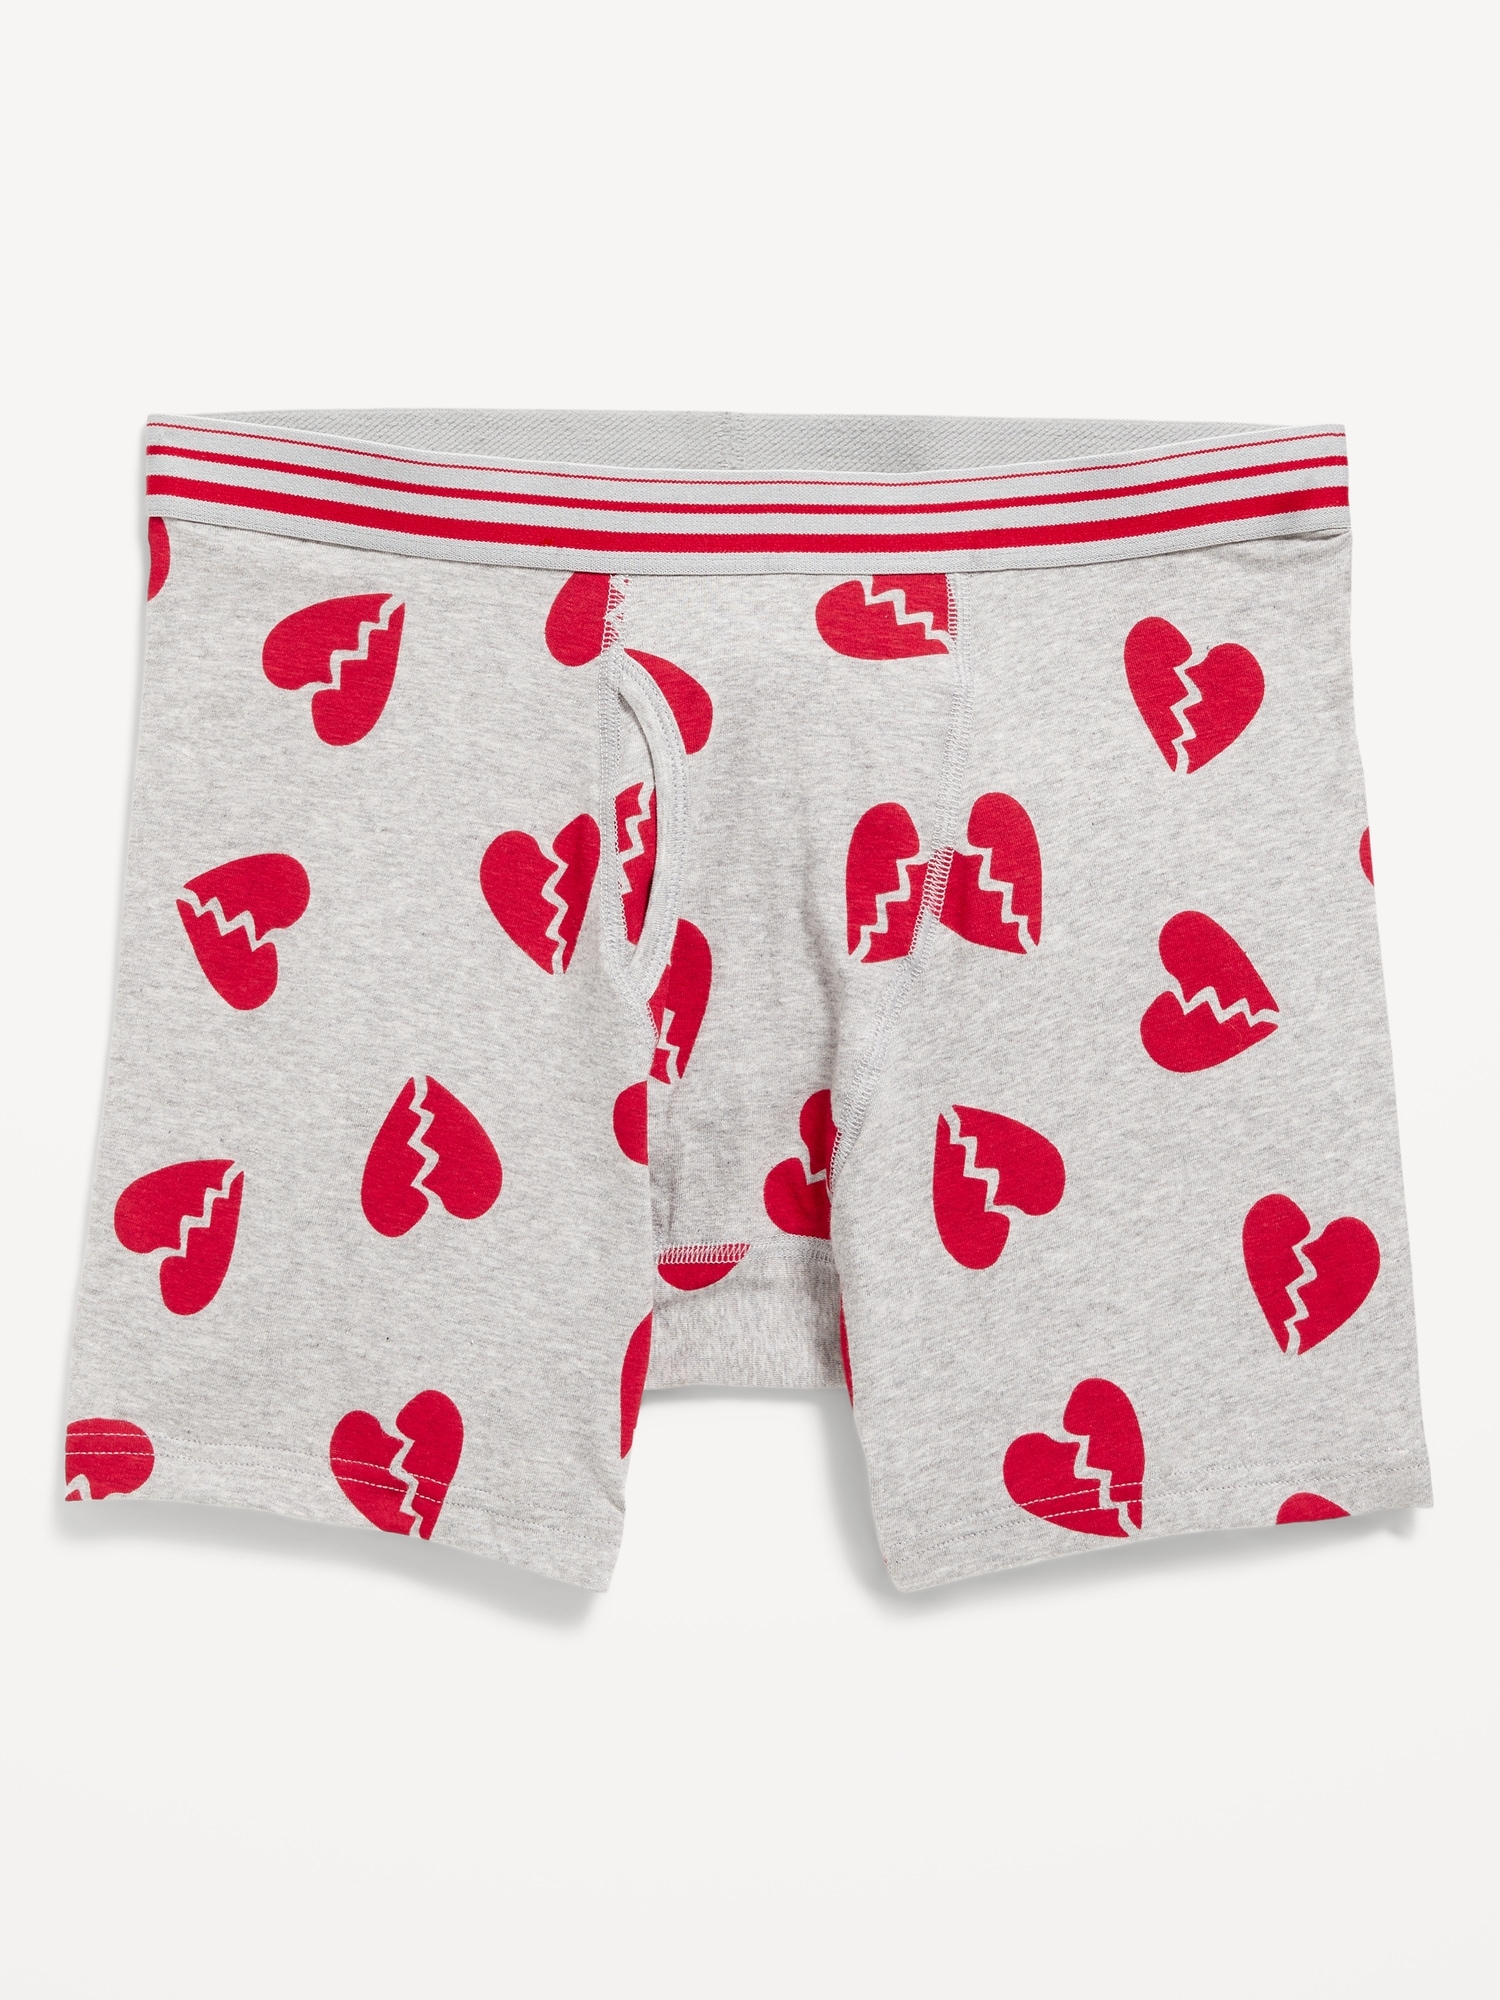 Old Navy Underwear Mens 1 Boxer Candy Hearts Valentine's Day S M L